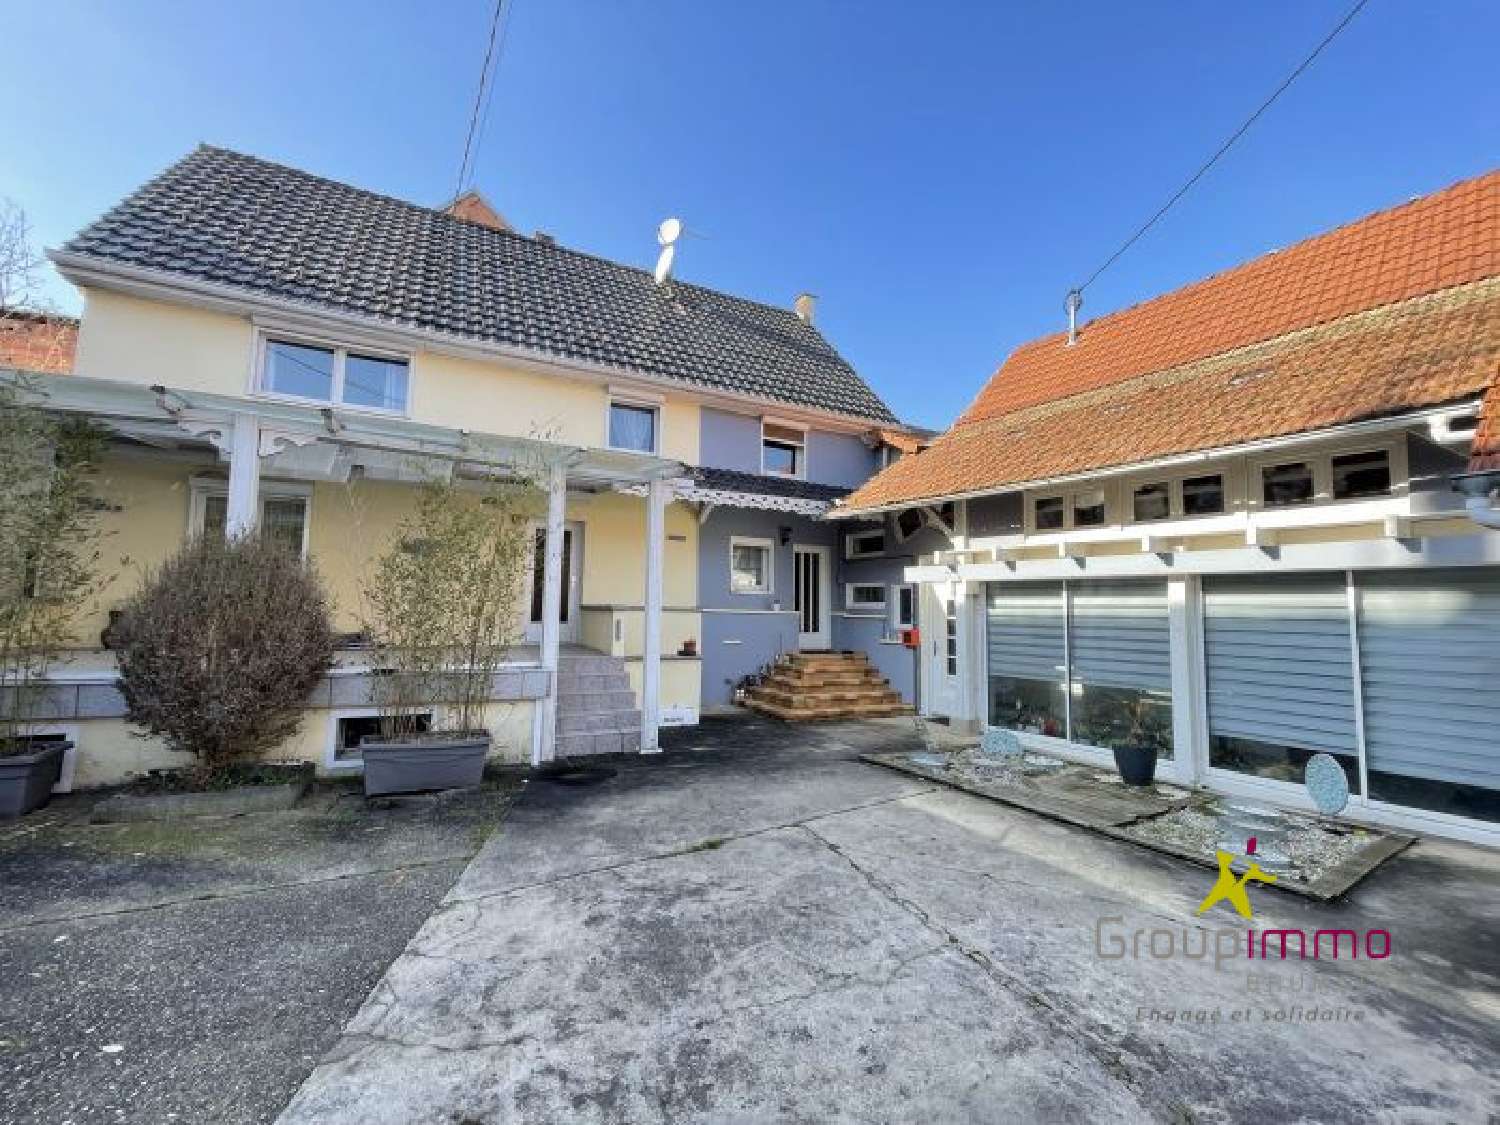  à vendre maison Mommenheim Bas-Rhin 1